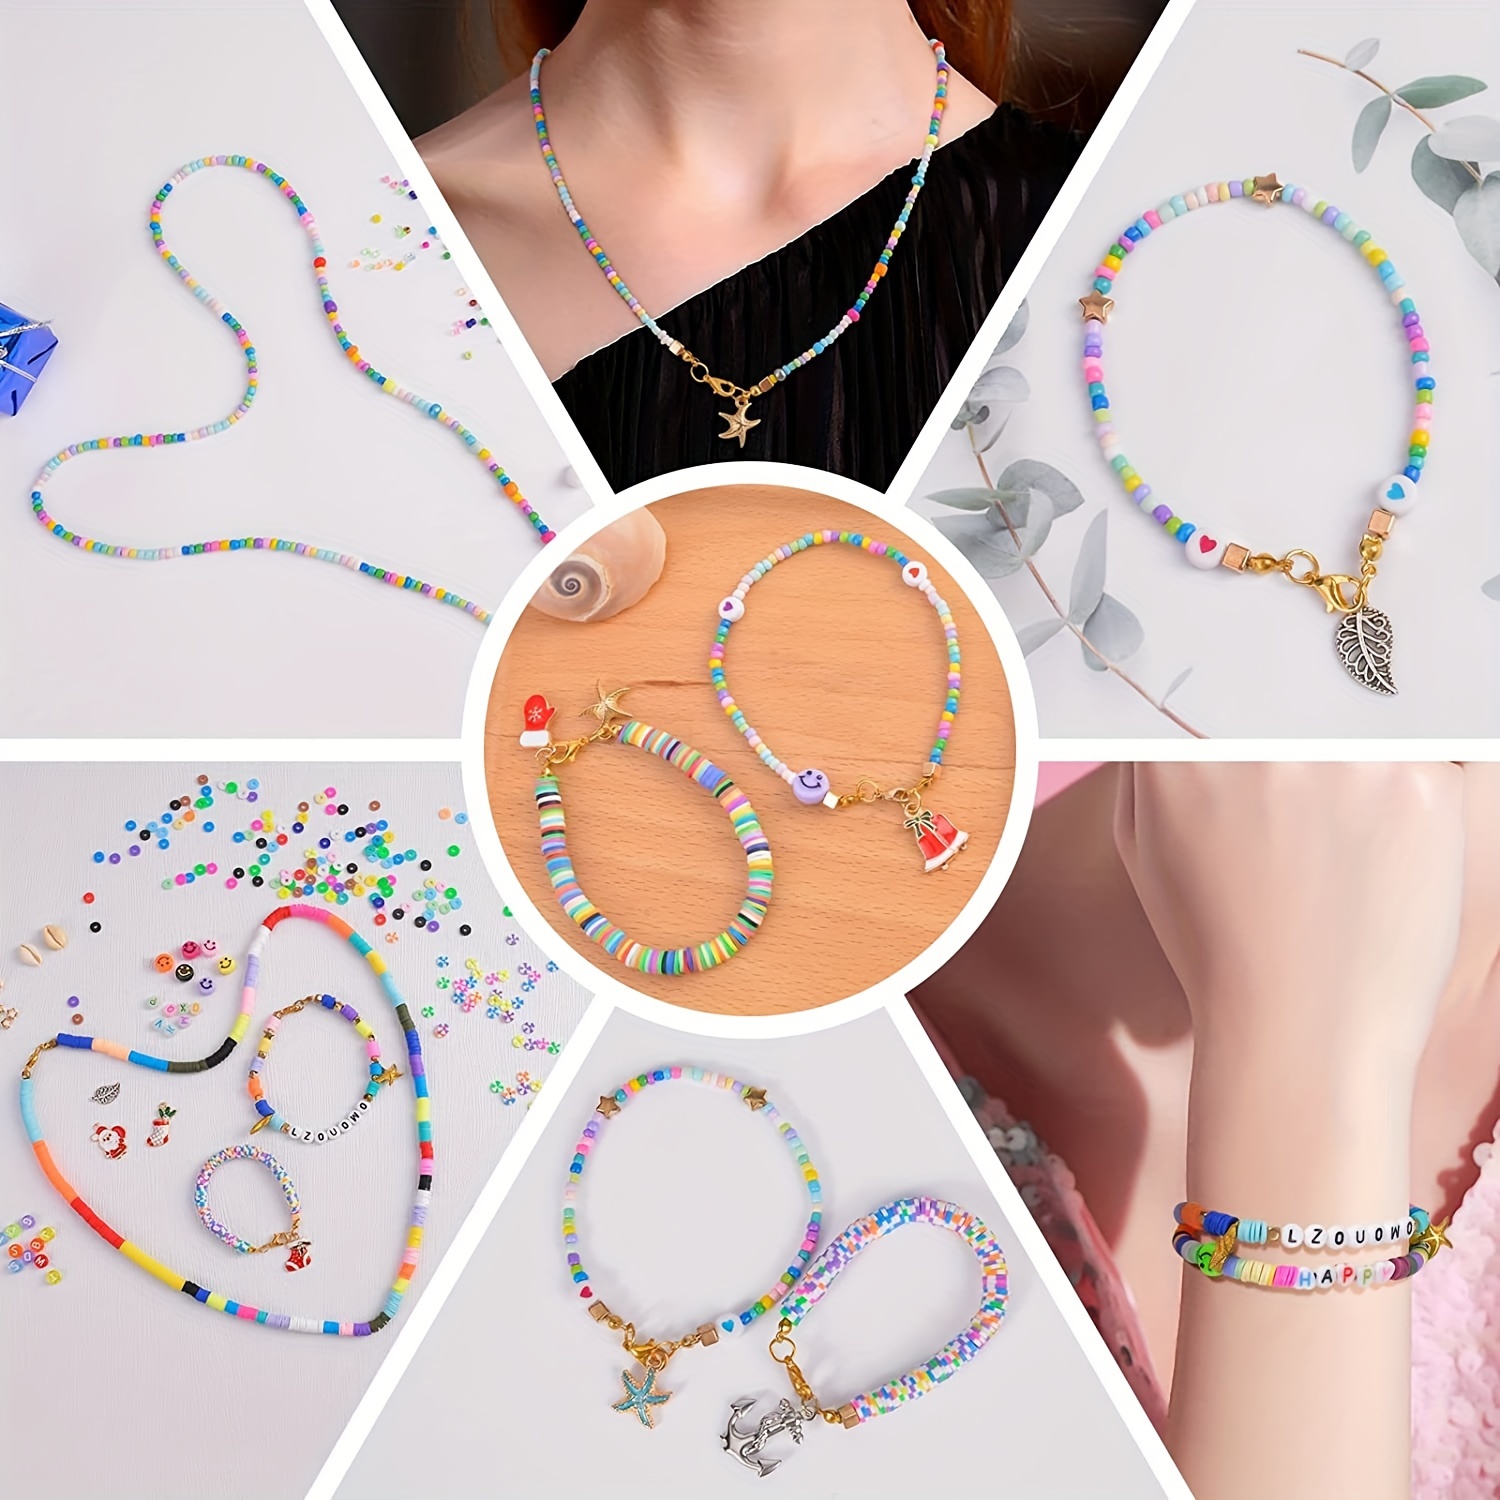 Bead Bracelet Making Kit, Bead Friendship Bracelets Kit With Beads Beads  Charm Beads And Elastic St